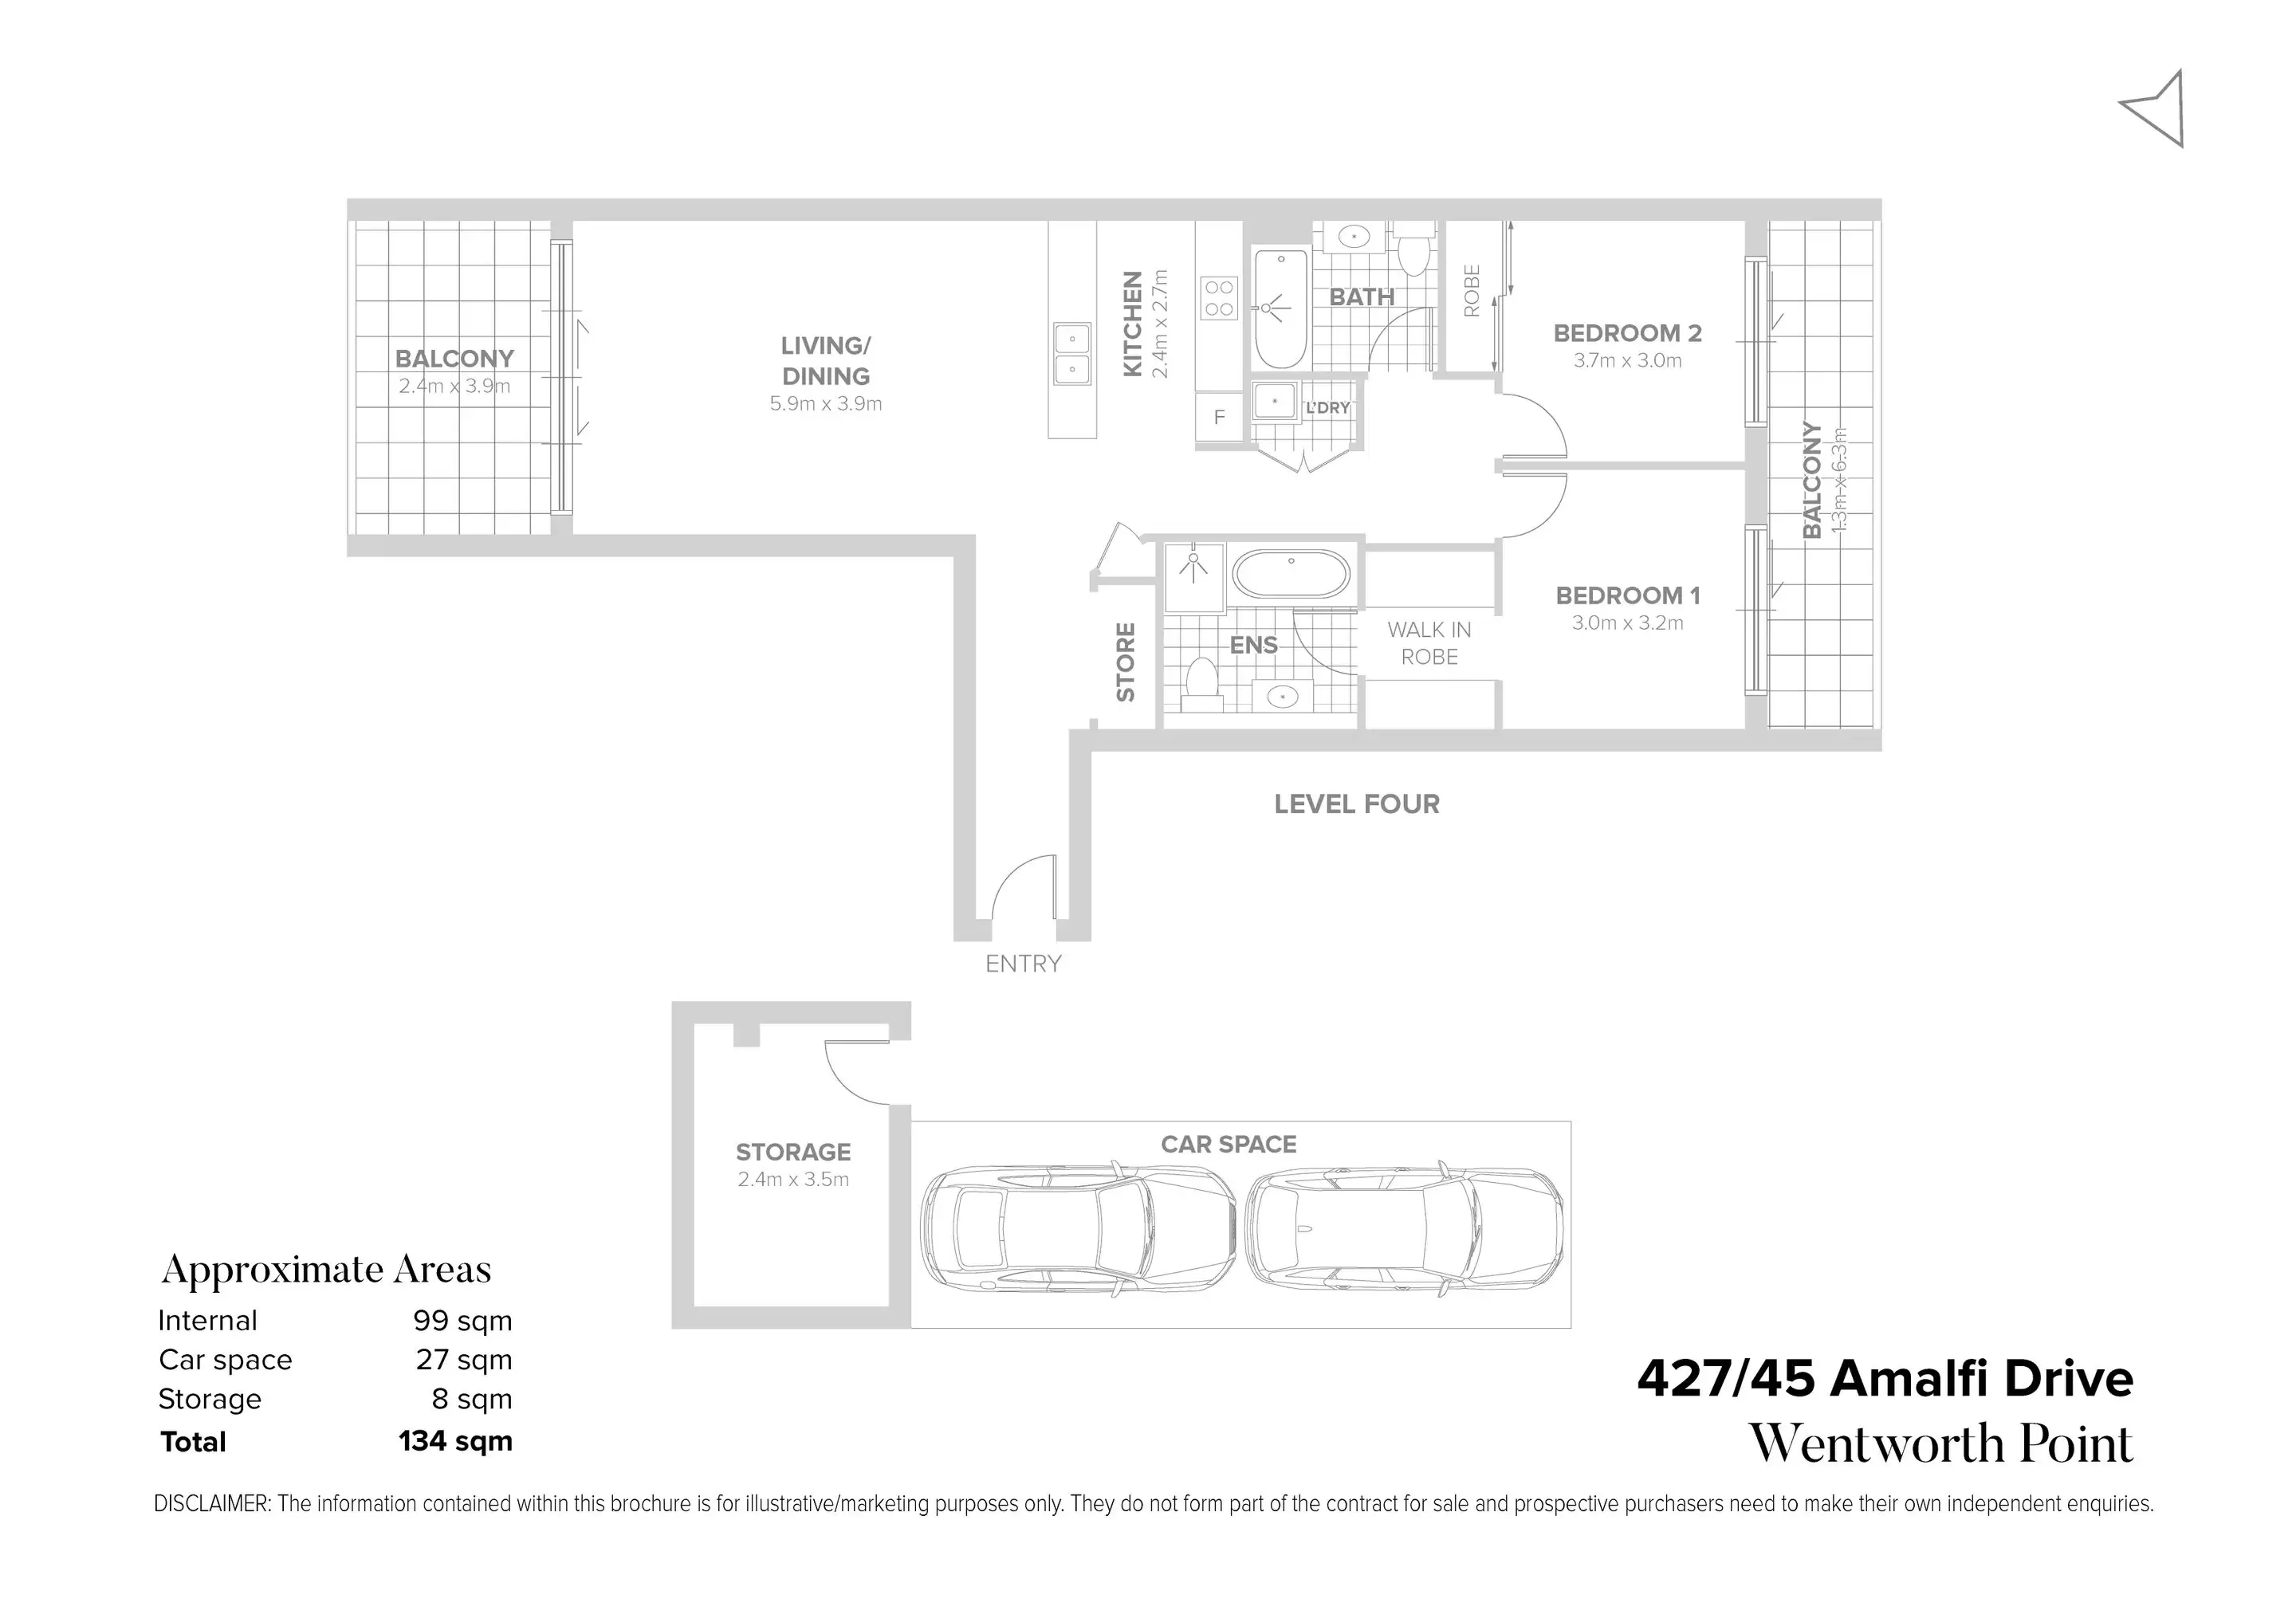 427/45 Amalfi Drive, Wentworth Point Sold by Chidiac Realty - floorplan